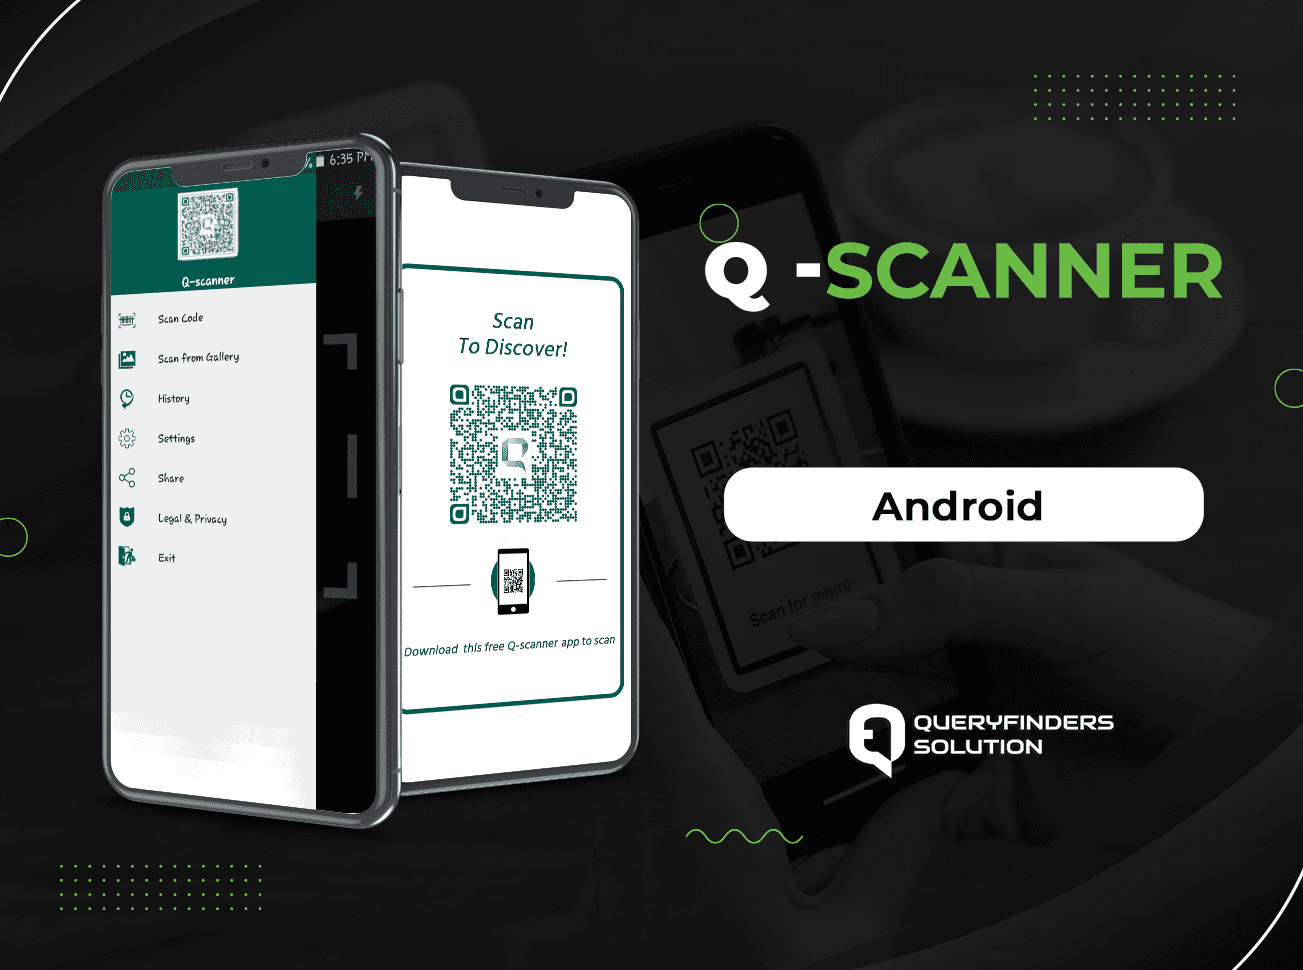 Q-scanner